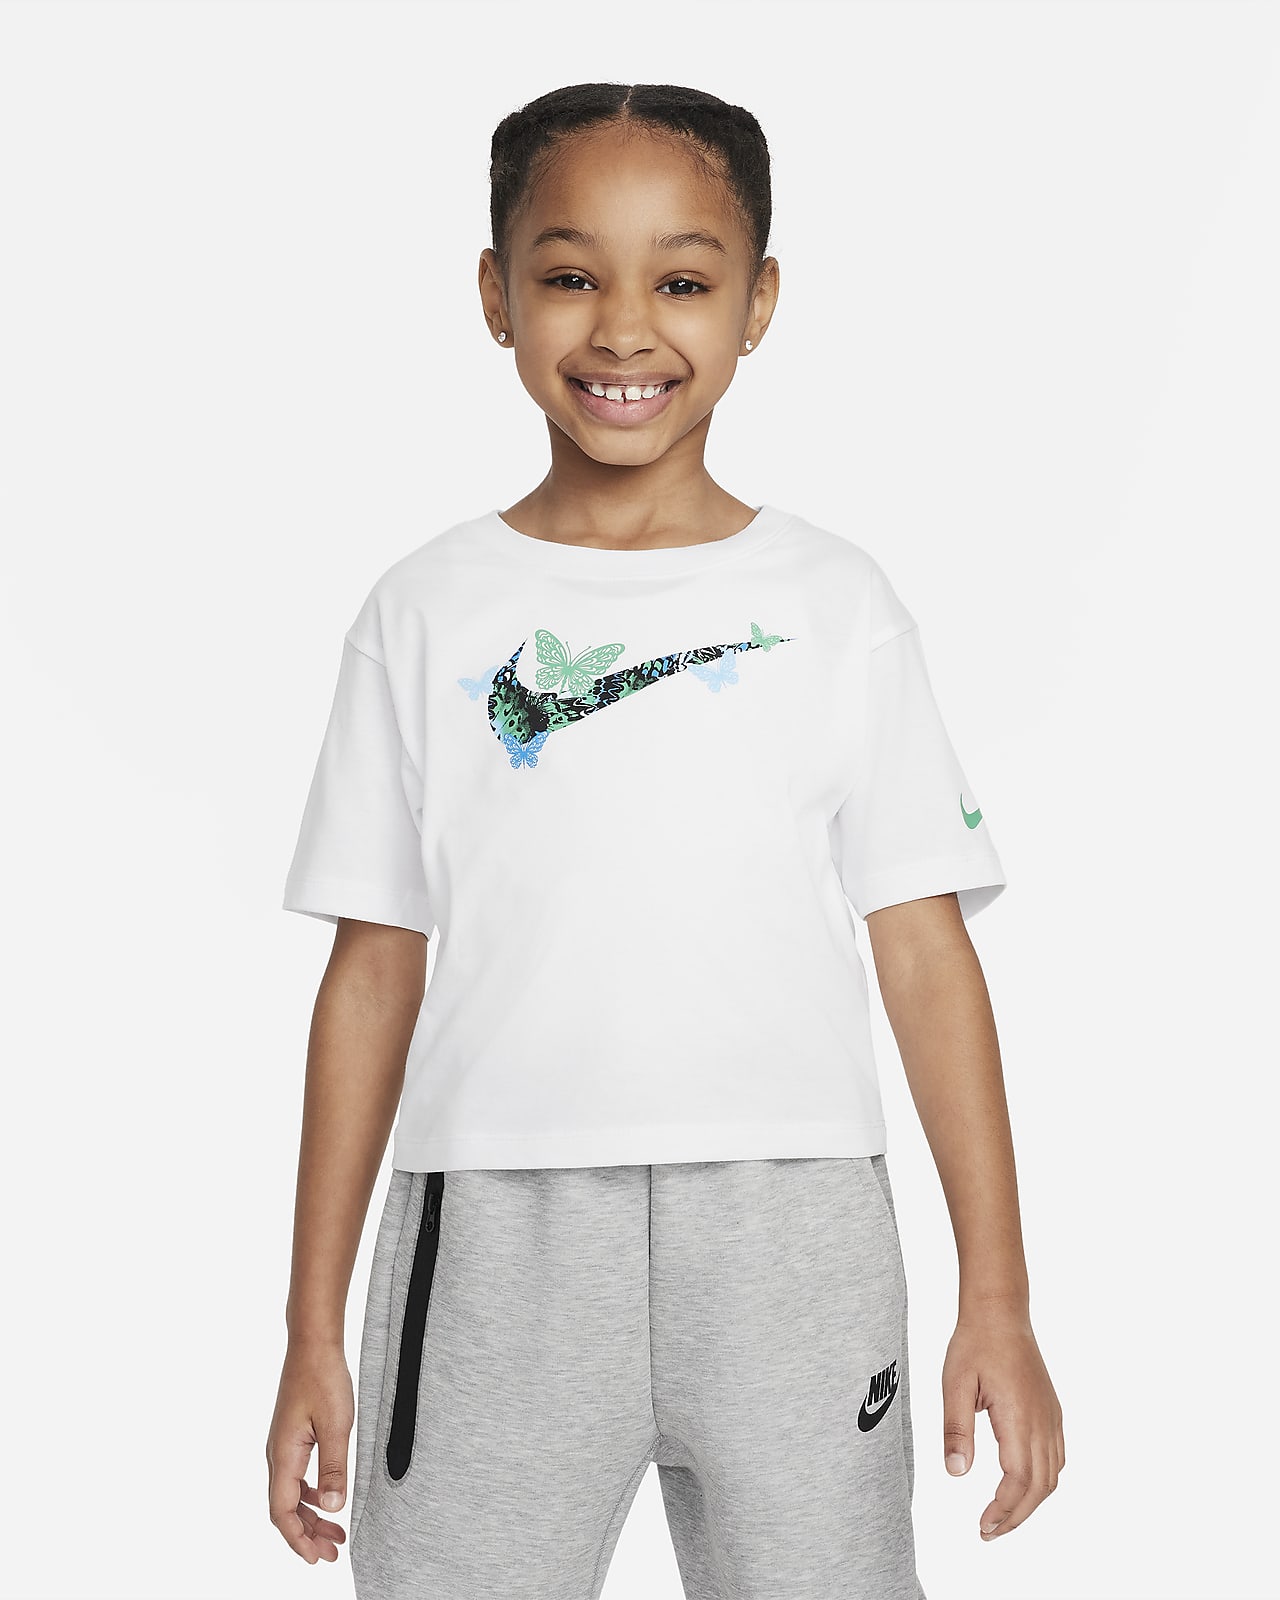 Nike Meta-Morph Little Kids' Graphic T-Shirt